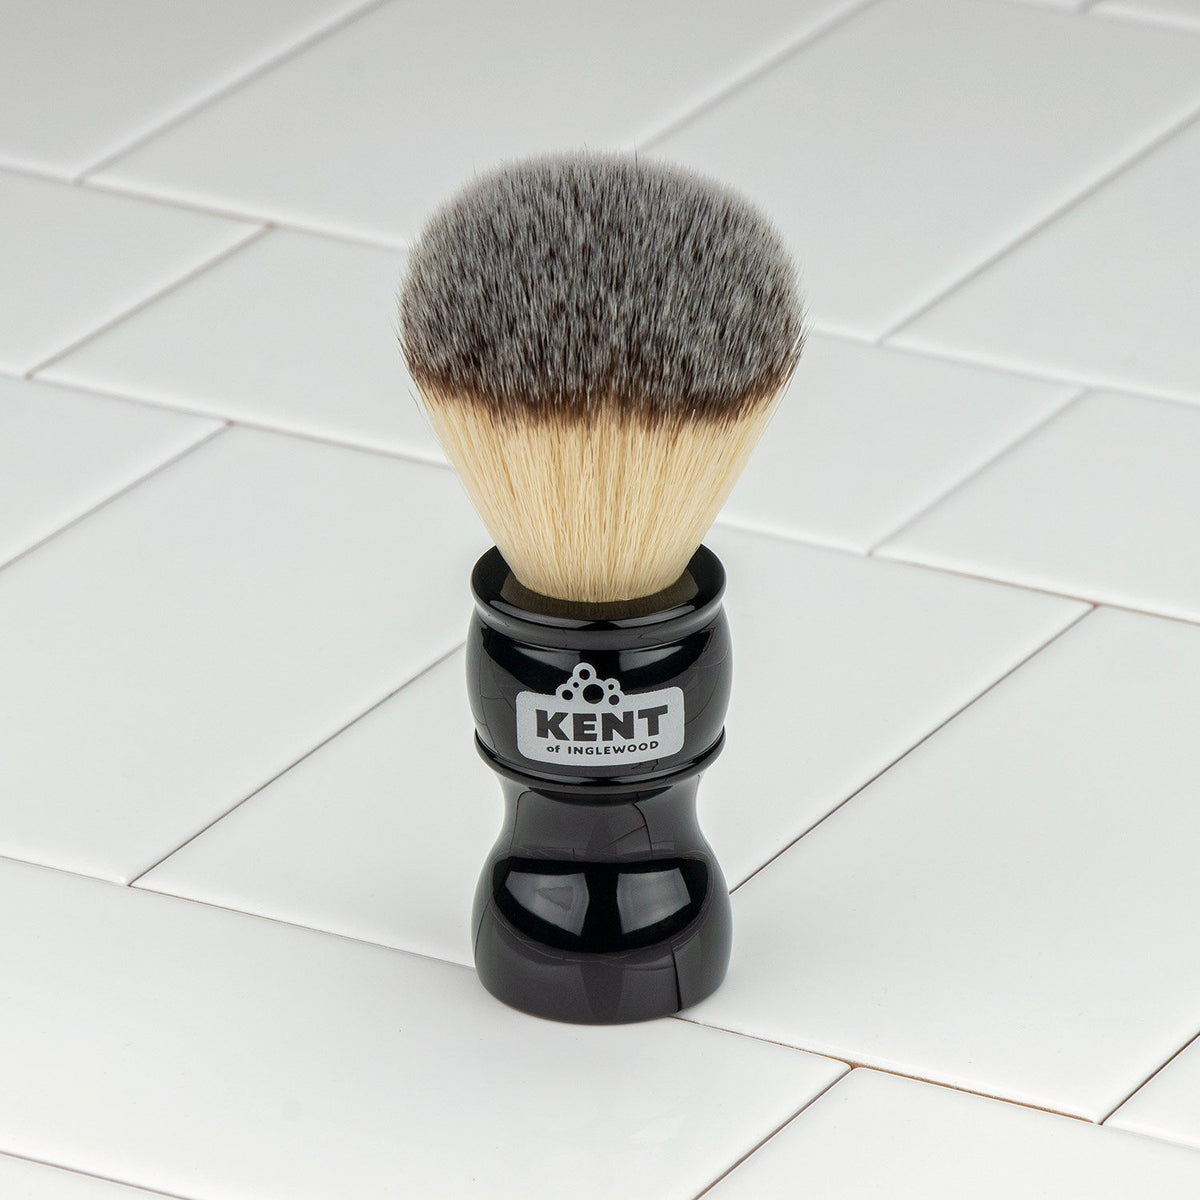 Kent of Inglewood Synthetic Fibre Shaving Brush